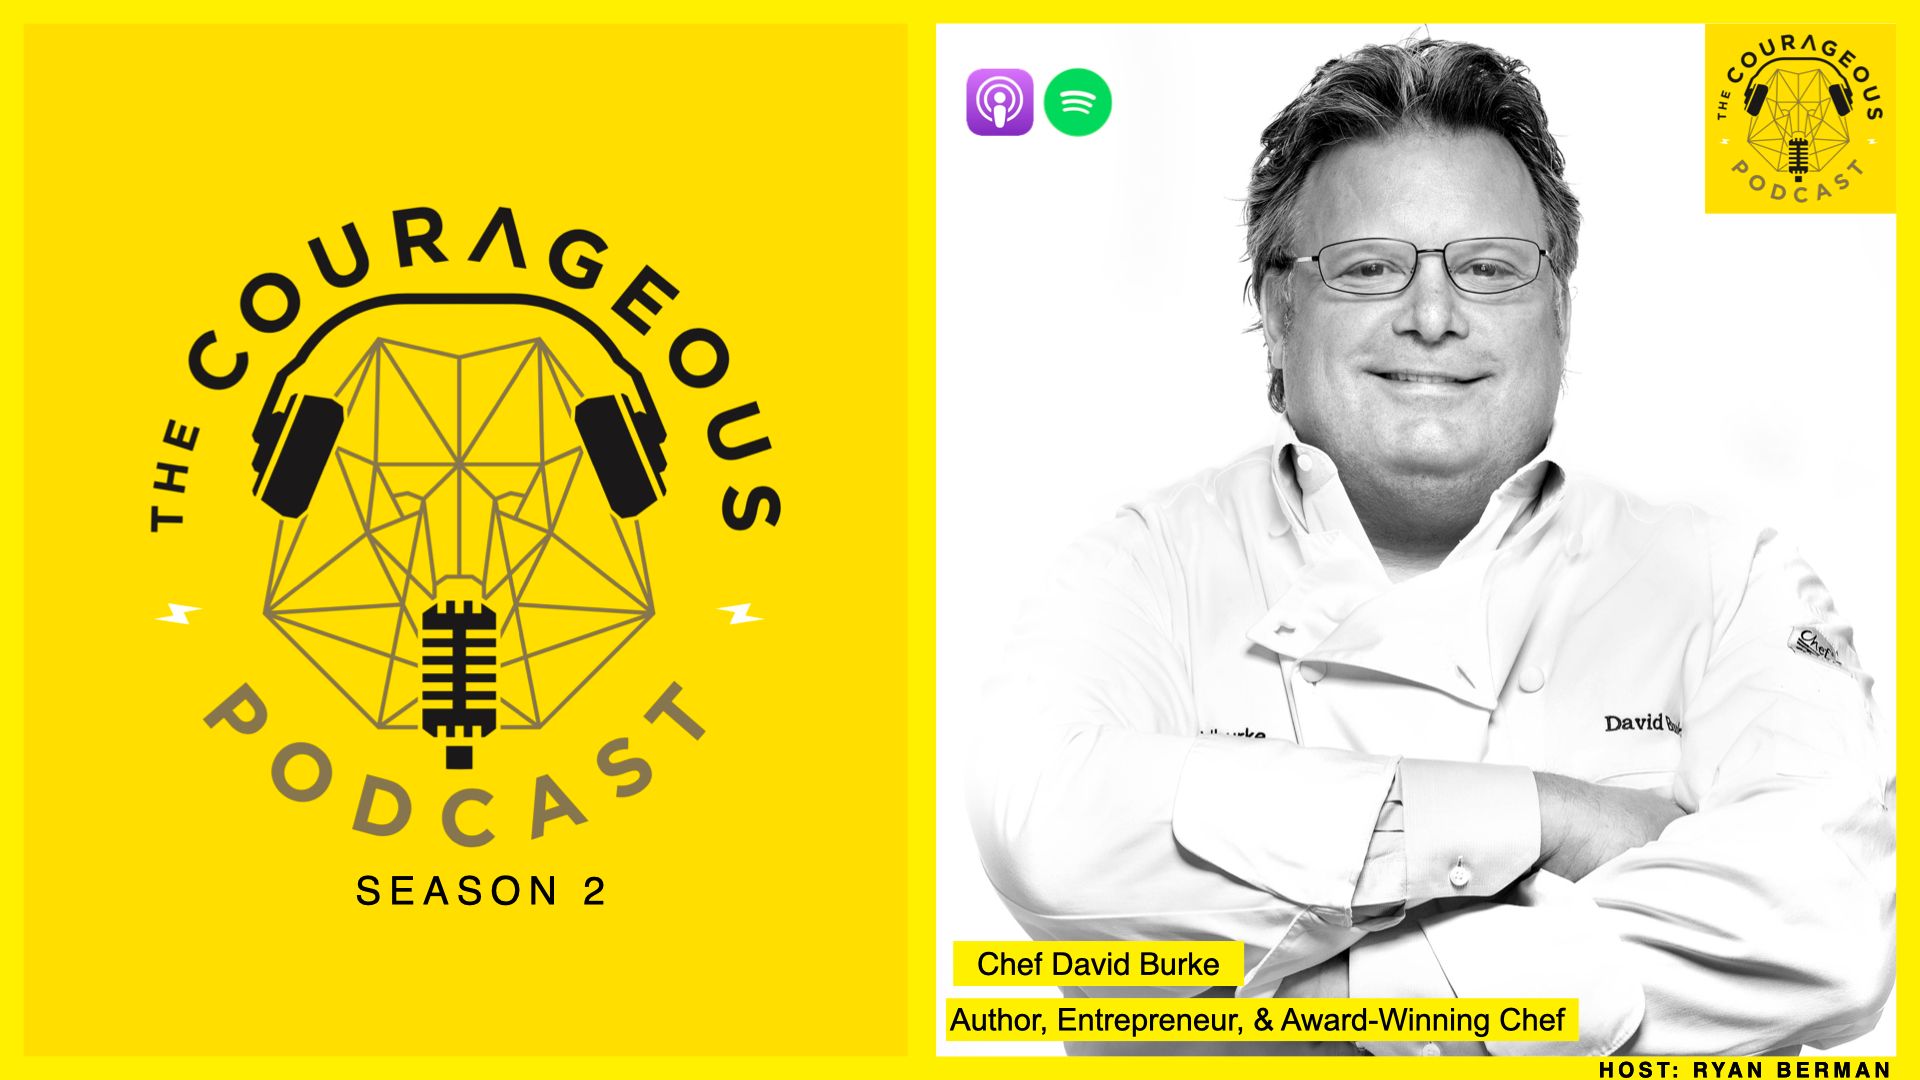 EP109 Chef David Burke - Author, Entrepreneur, & Award-Winning Chef